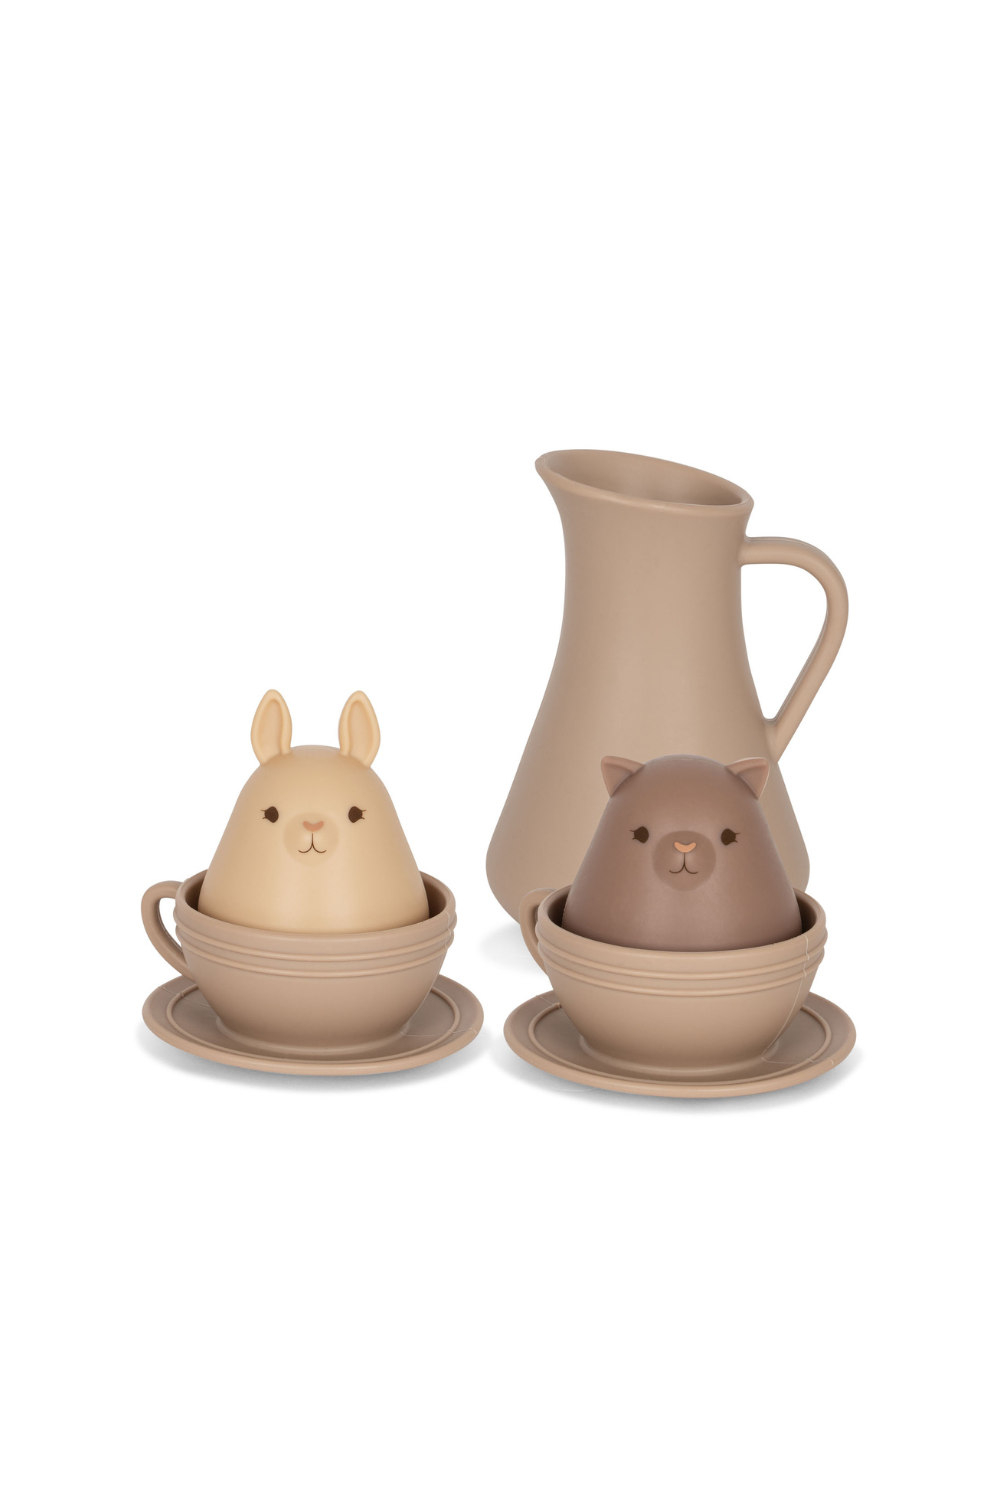 Silicone Bath Toy Set - Teacups: Whimsical Bathtime Fun